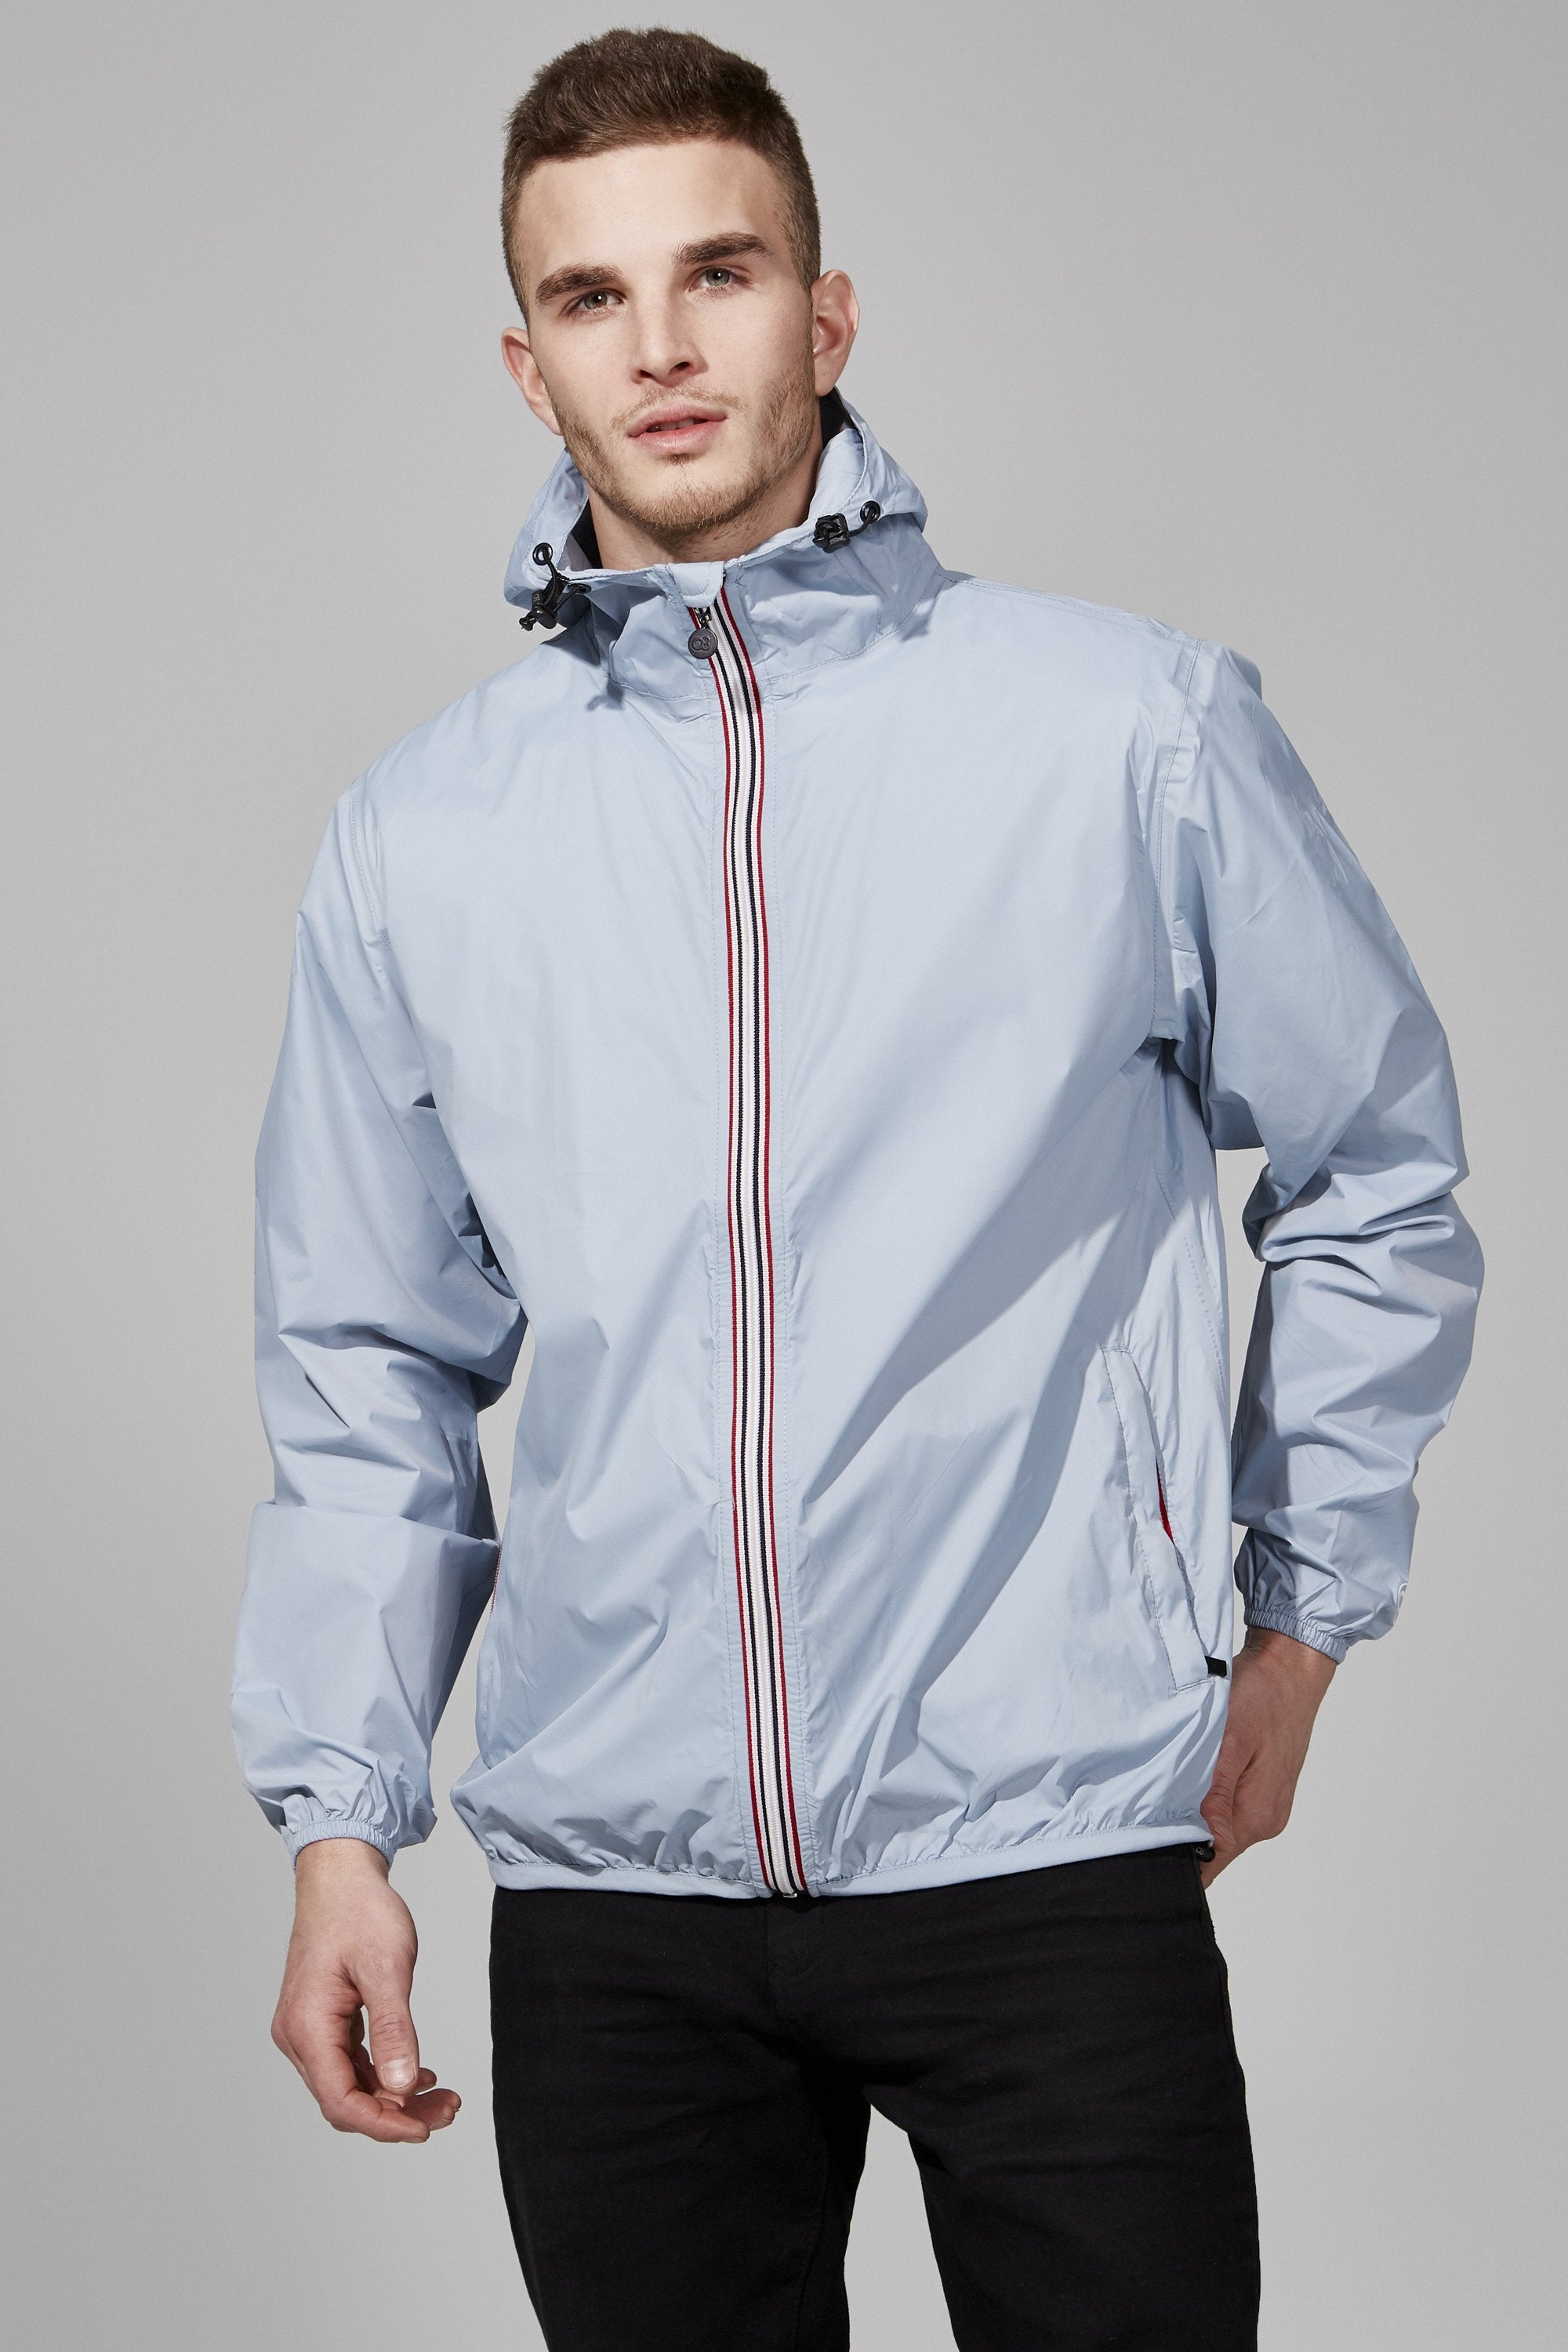 Picture of a Men's Full Zip Blue Waterproof Rain Jacket front view